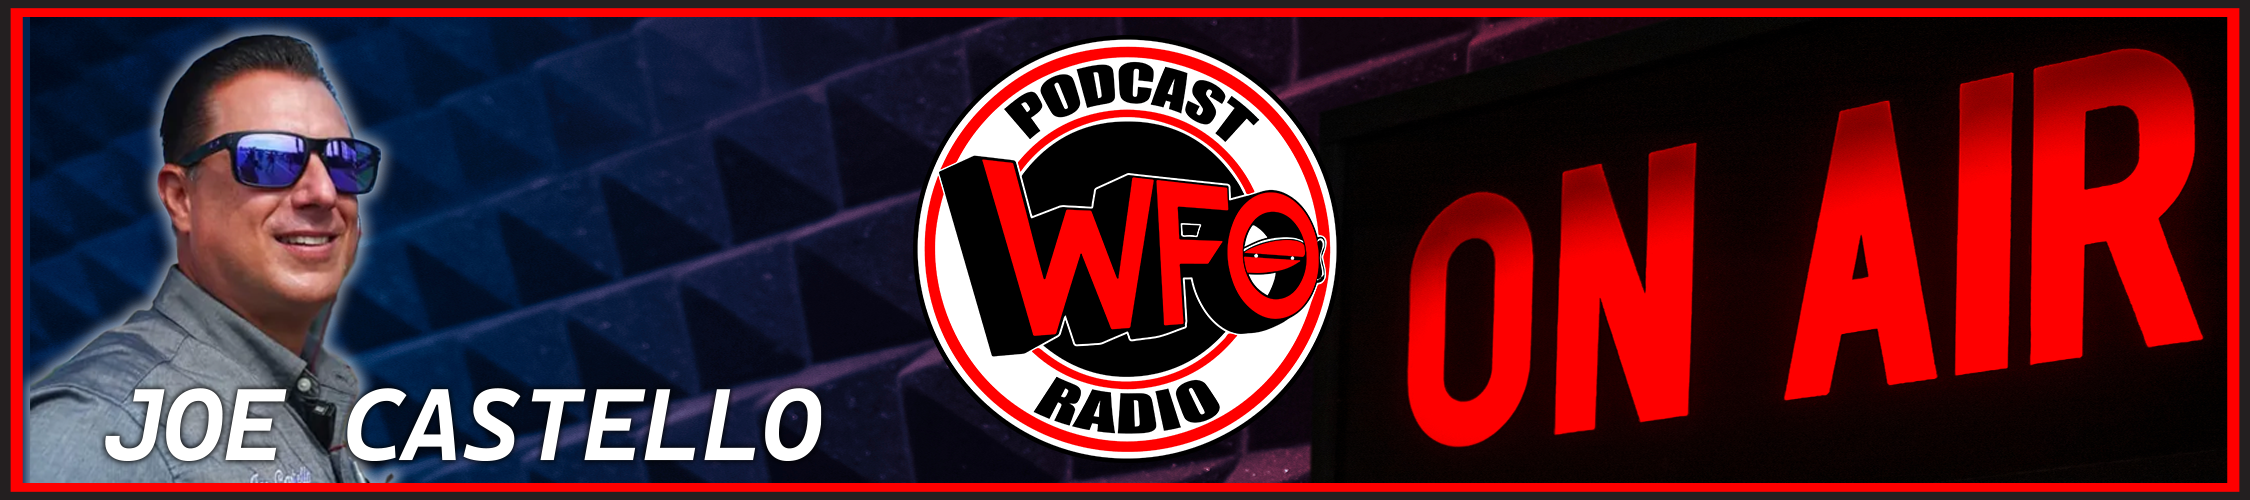 WFO Radio